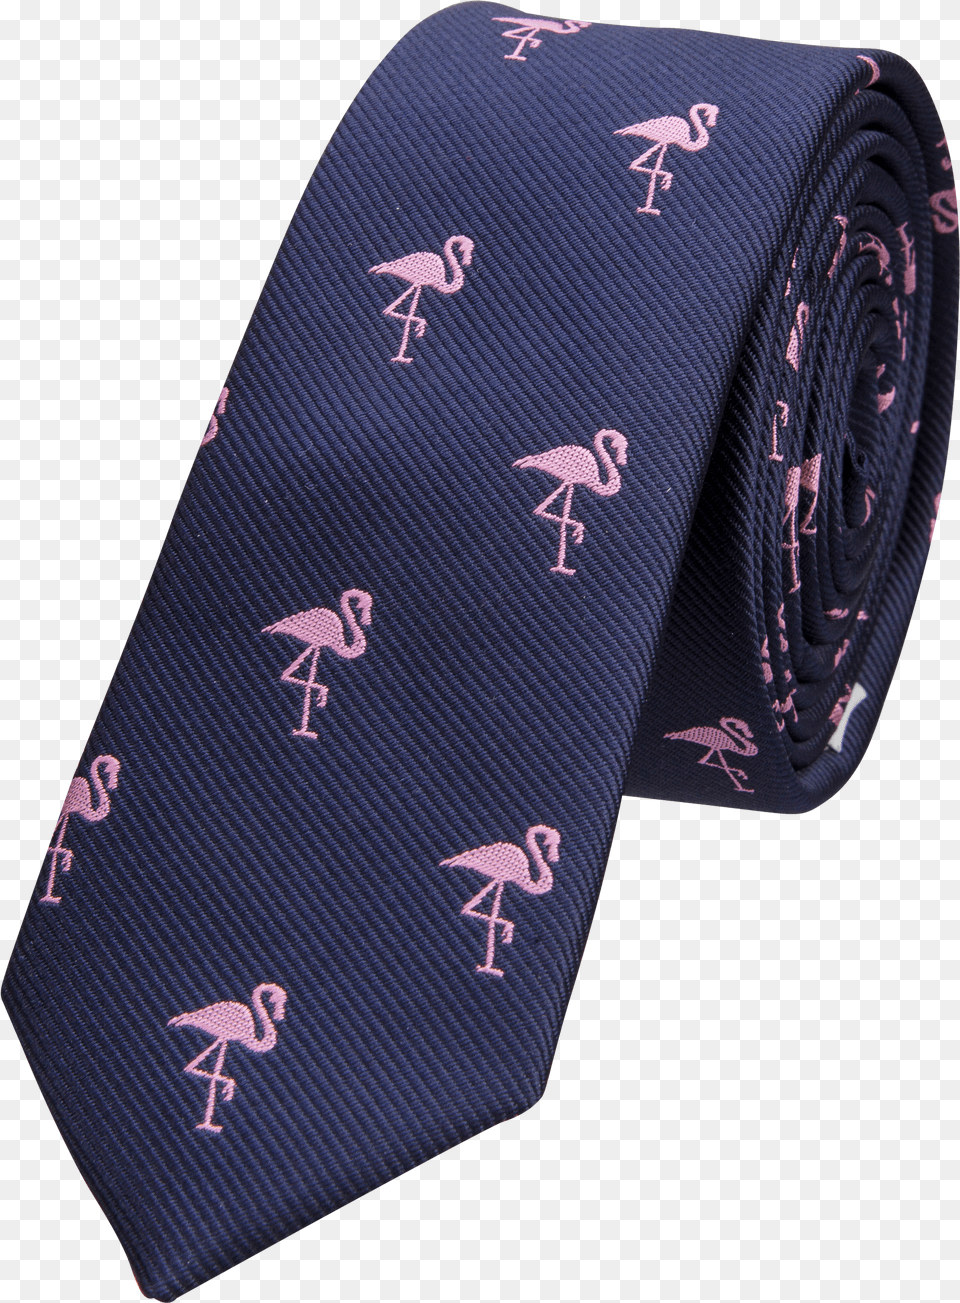 Navypink Flamingo 5cm Tie Yd Flamingo Tie Png Image